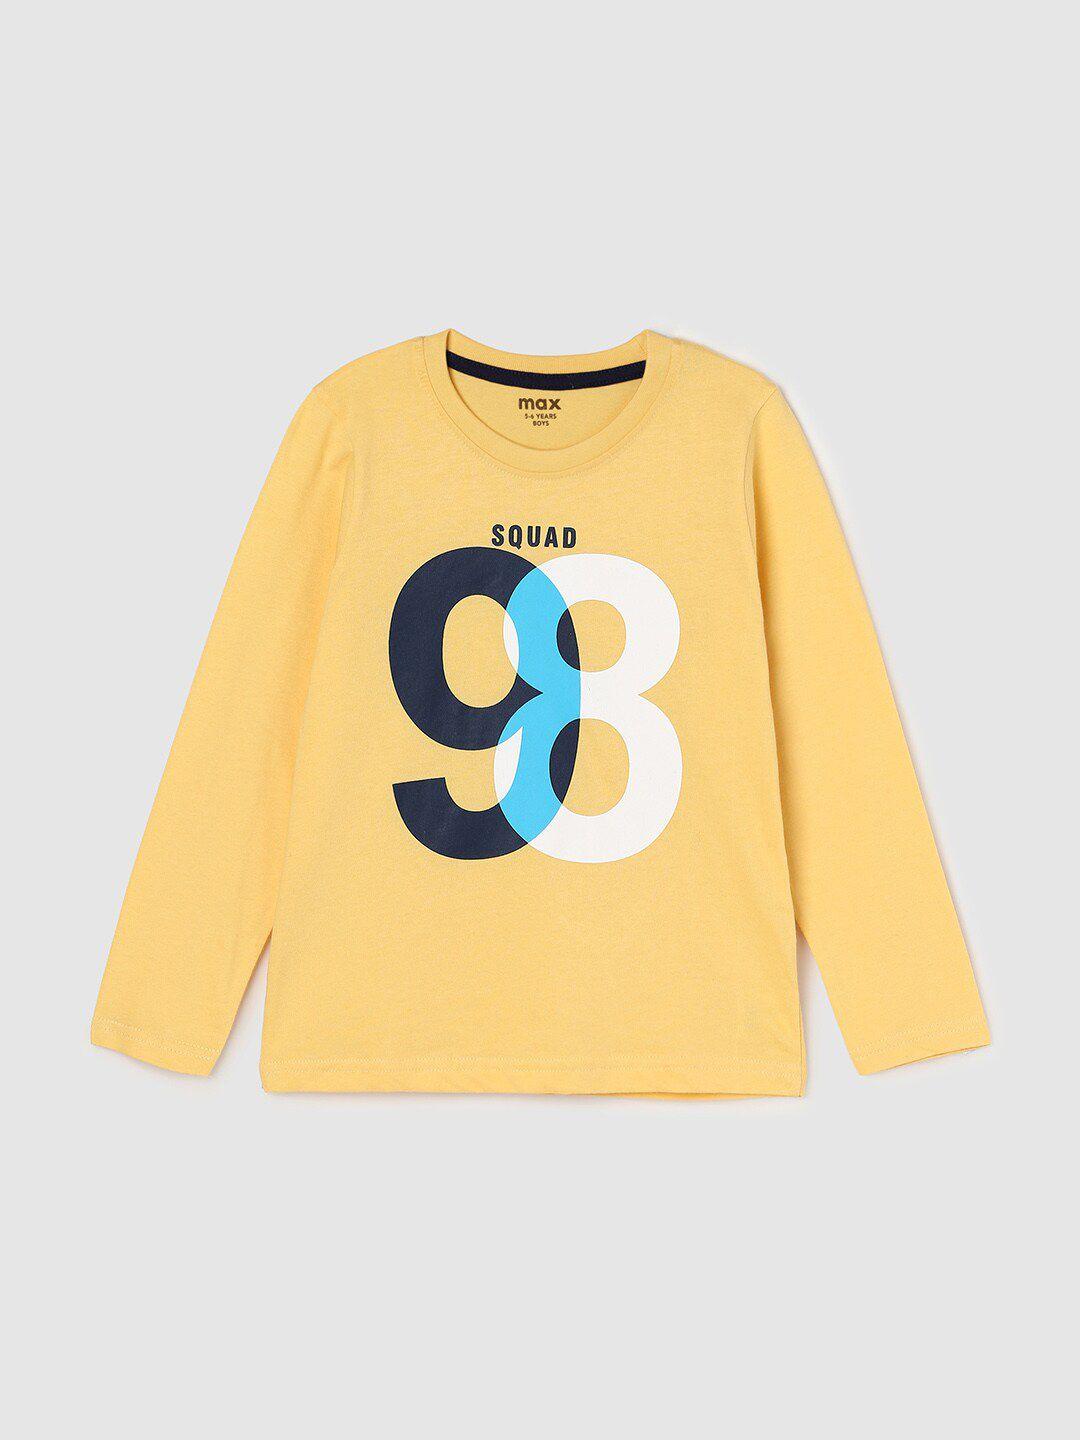 max boys yellow typography printed cotton t-shirt